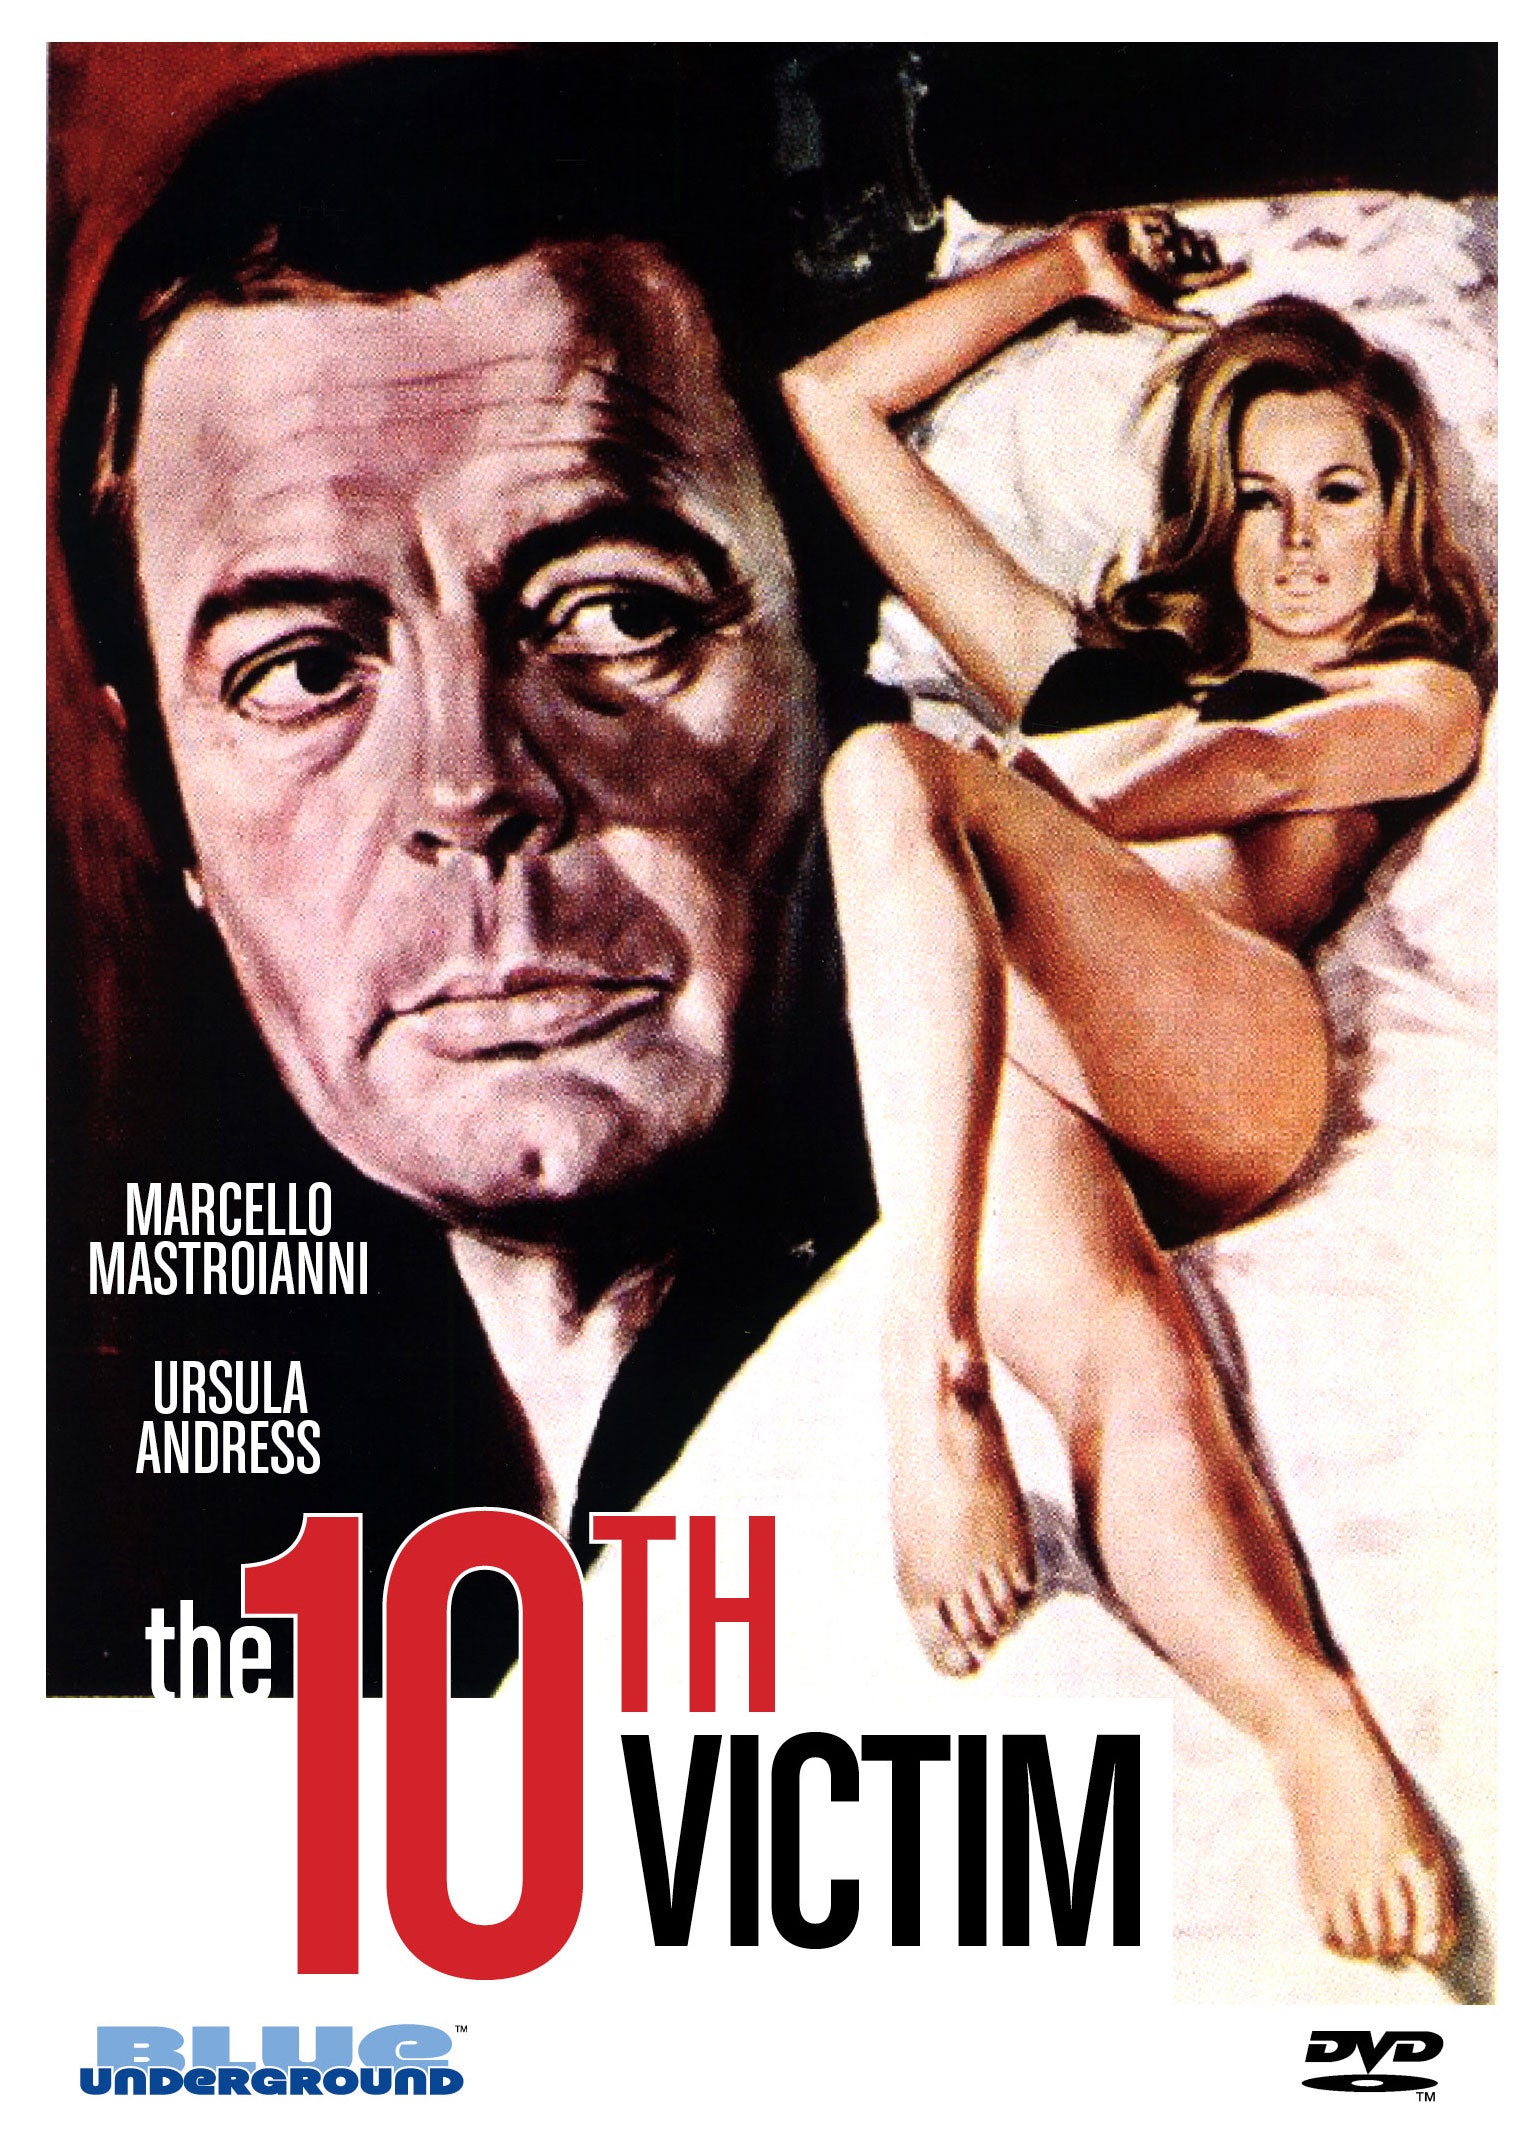 THE 10TH VICTIM DVD